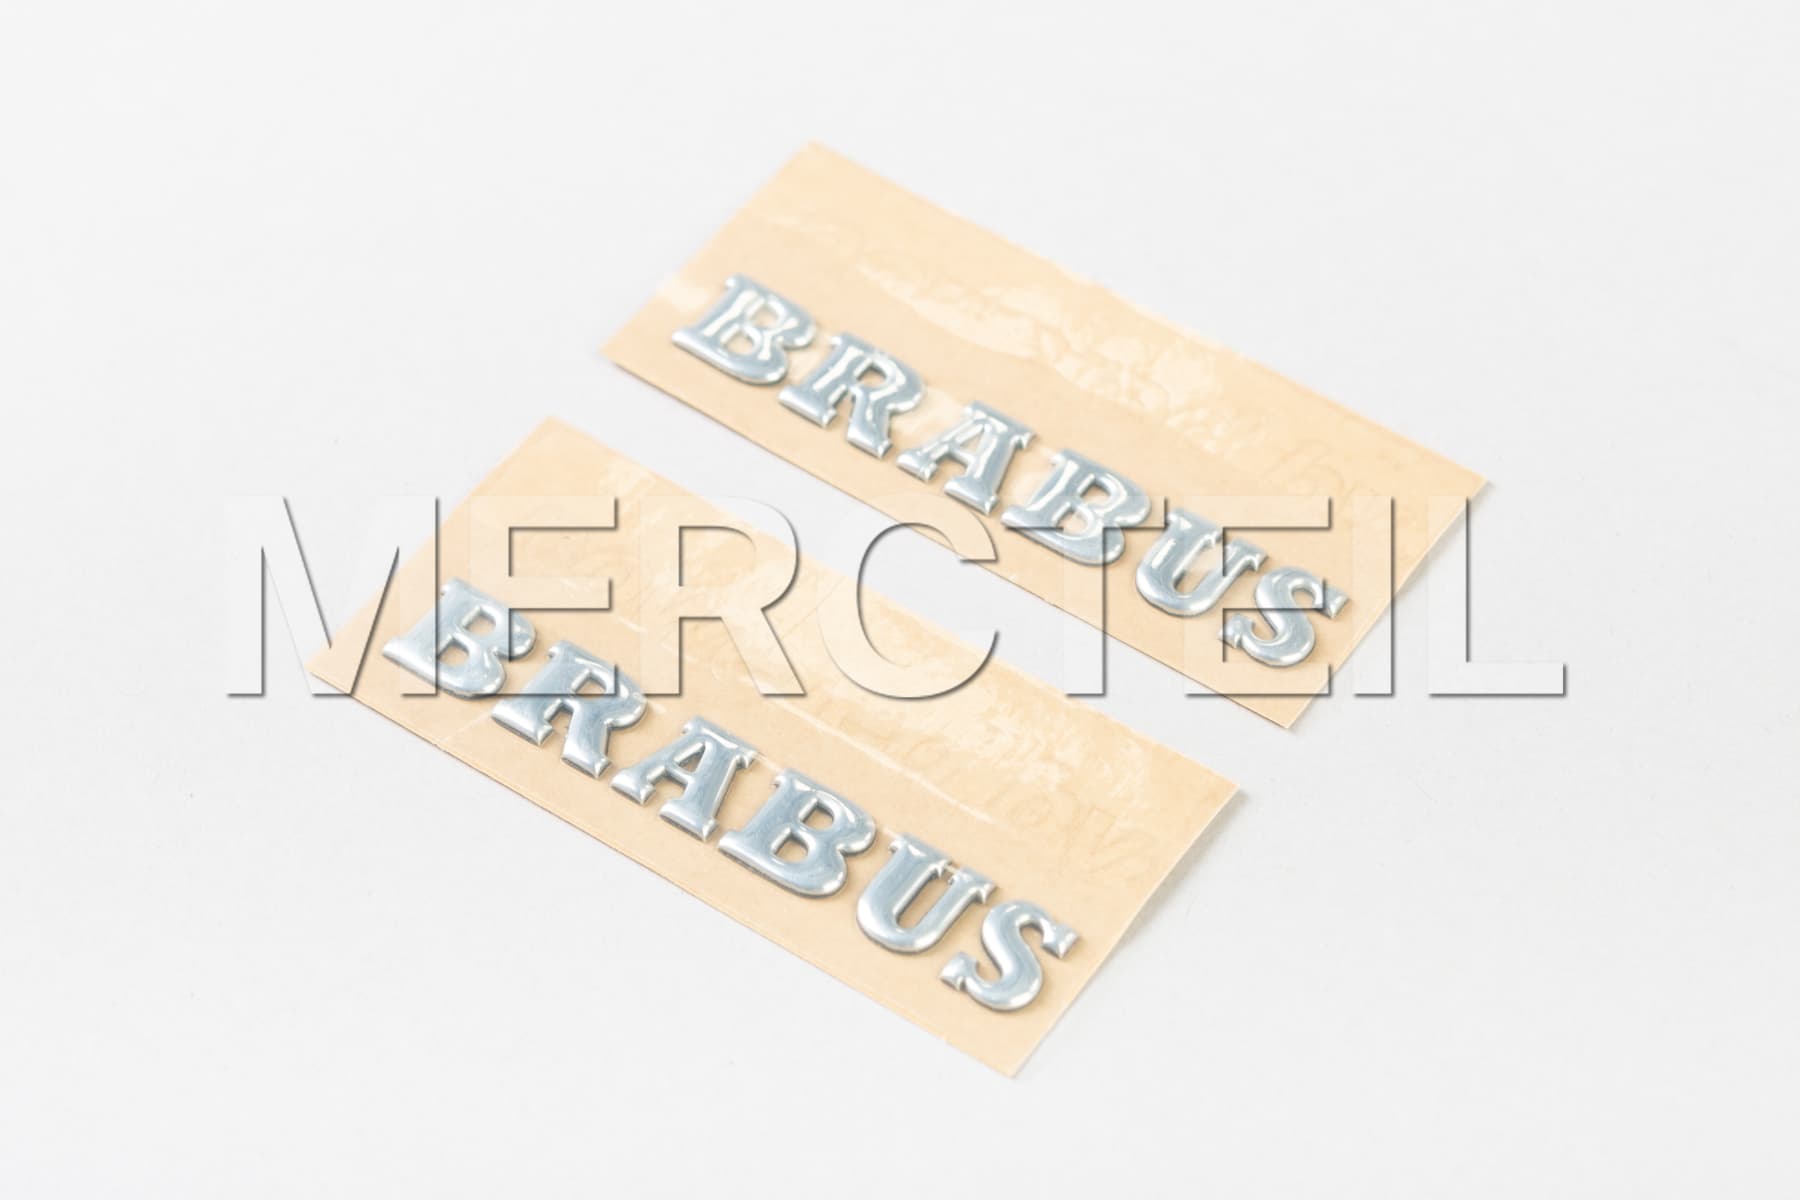 BRABUS Lettering Black Fenders Stickers Genuine BRABUS (Part number: 219-000-22)